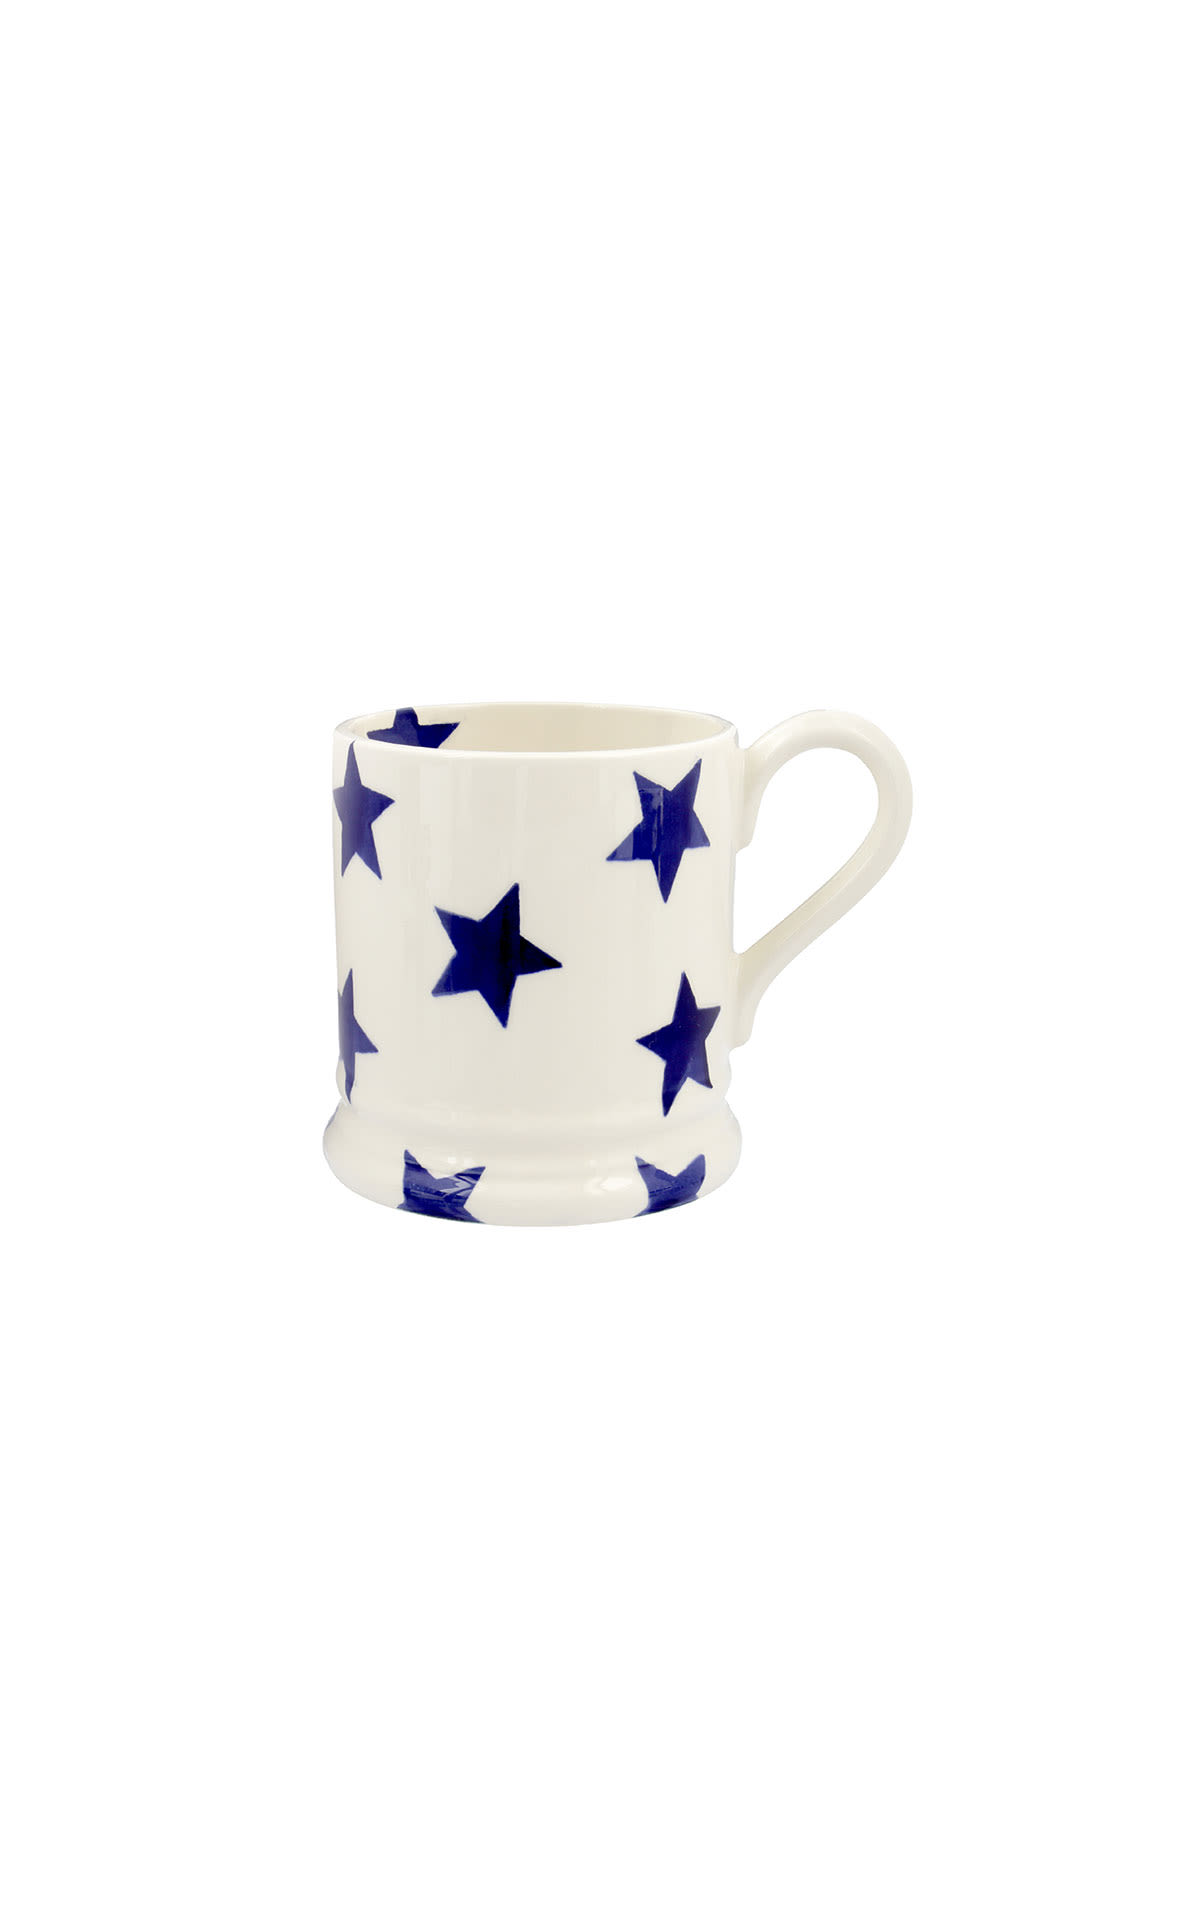 Emma Bridgewater Blue star half pint mug from Bicester Village